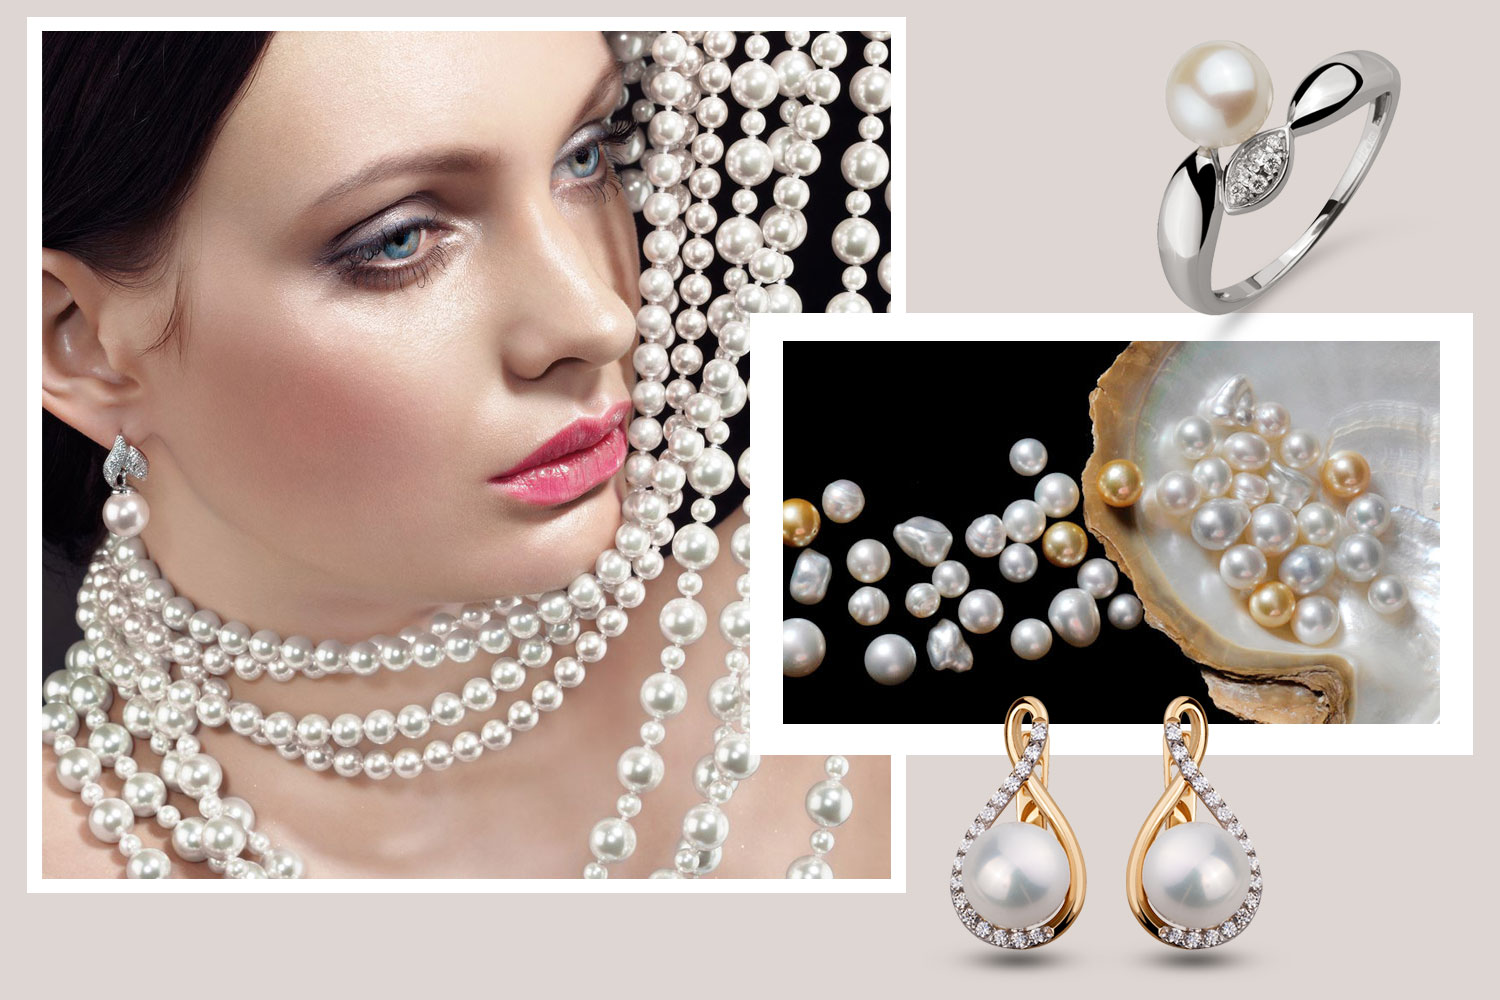 River pearls